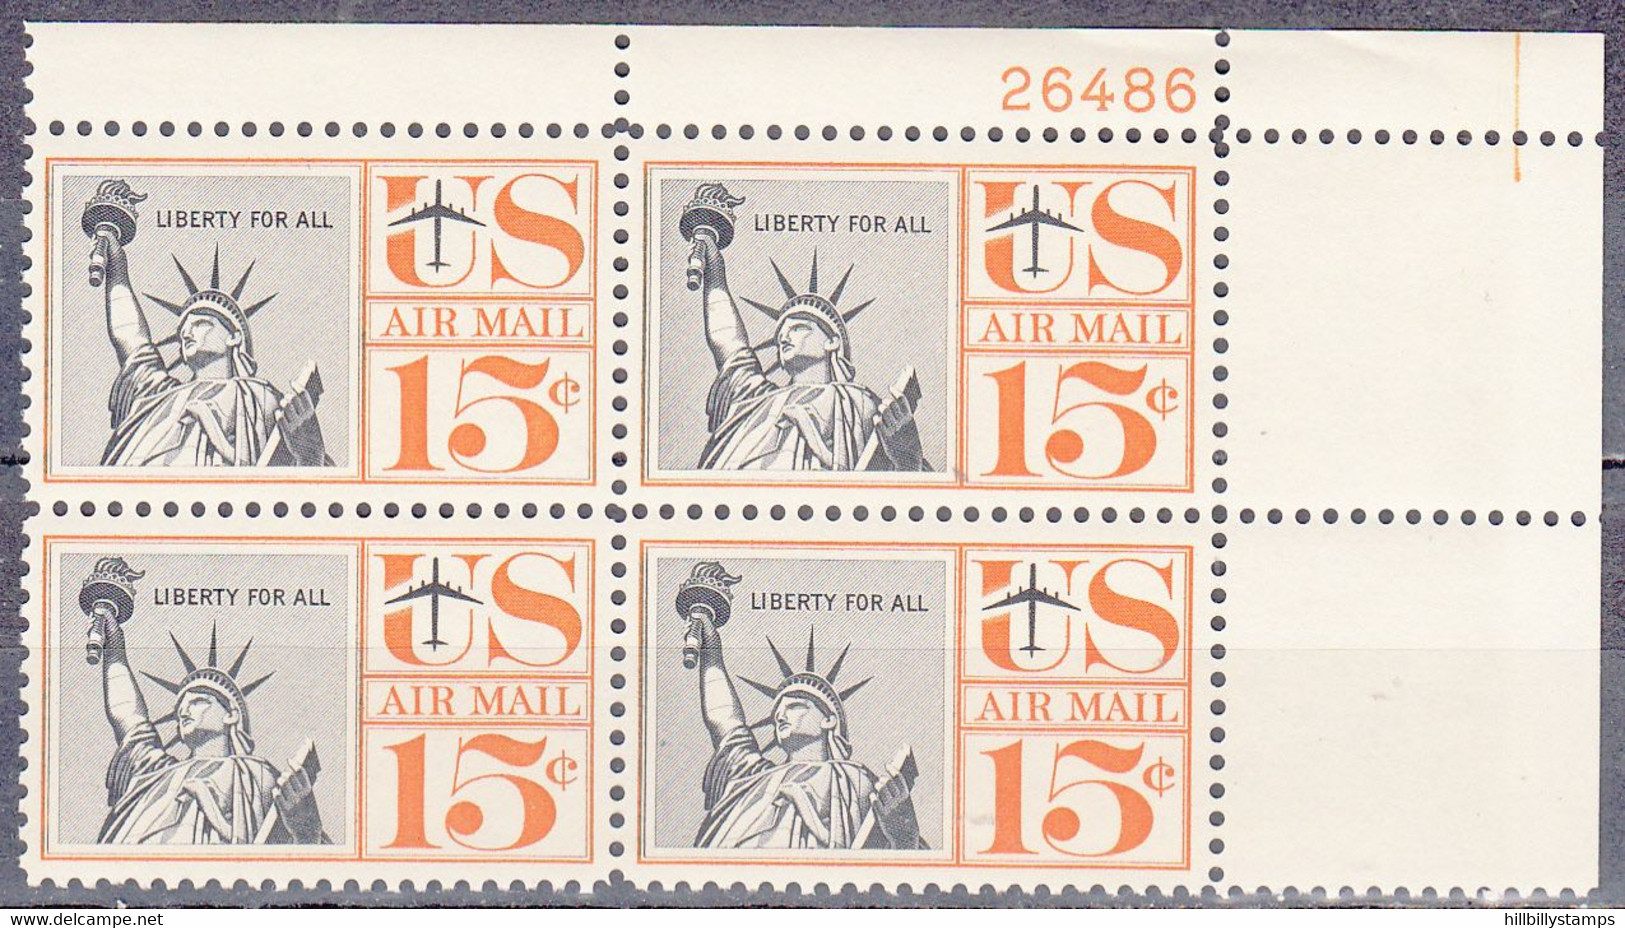 UNITED STATES    SCOTT NO C58  MNH   YEAR  1959  PLATE NUMBER BLOCK - 2b. 1941-1960 Unused